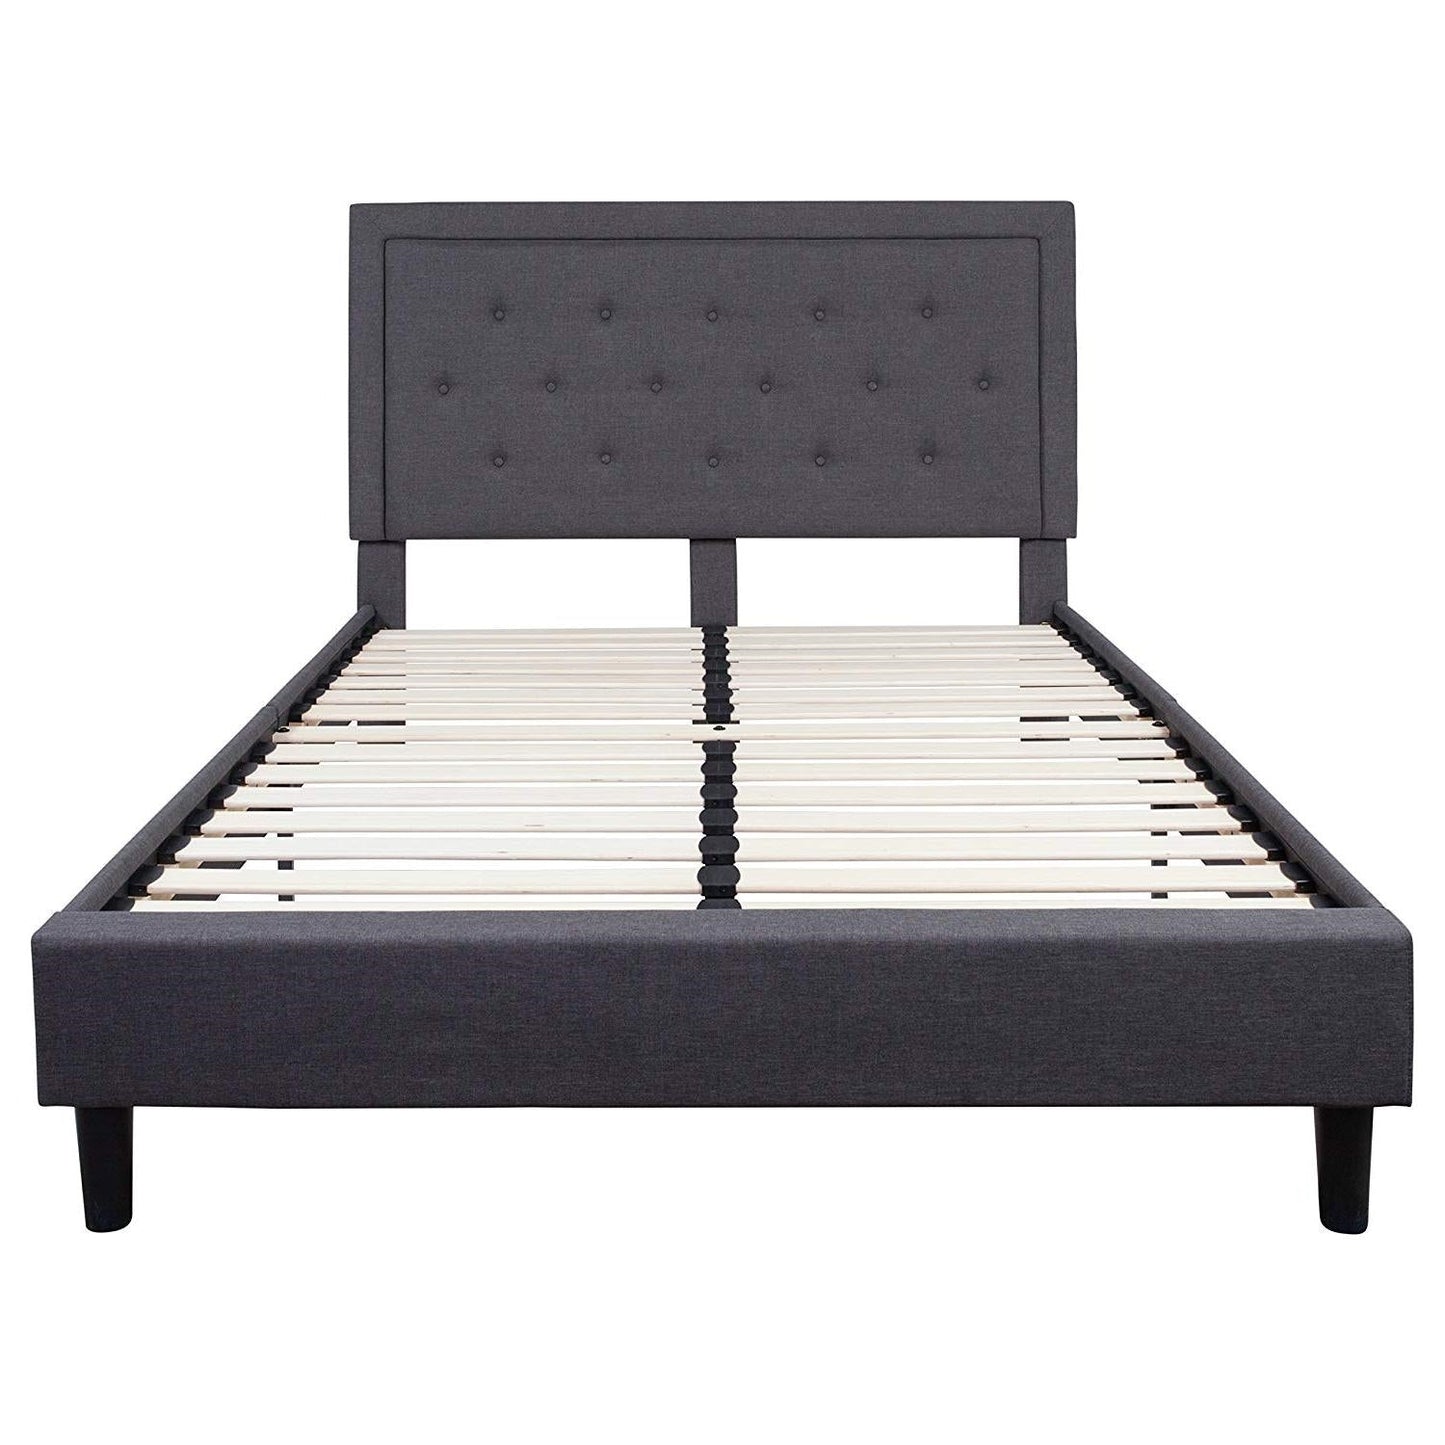 Bedroom > Bed Frames > Platform Beds - Queen Size Dark Gray Fabric Upholstered Platform Bed Frame With Headboard